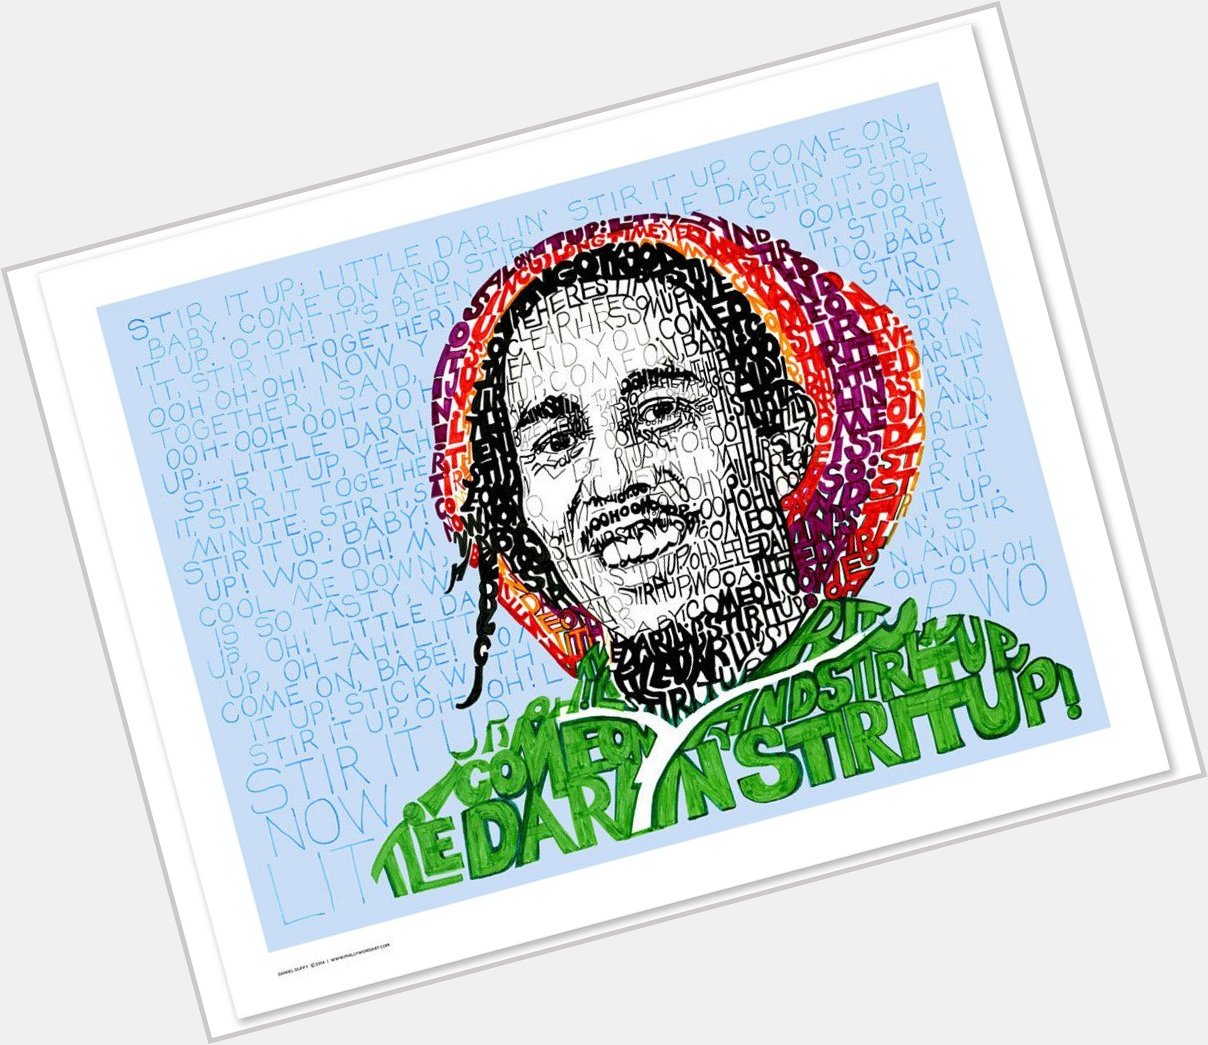 Happy Birthday Bob Marley! 